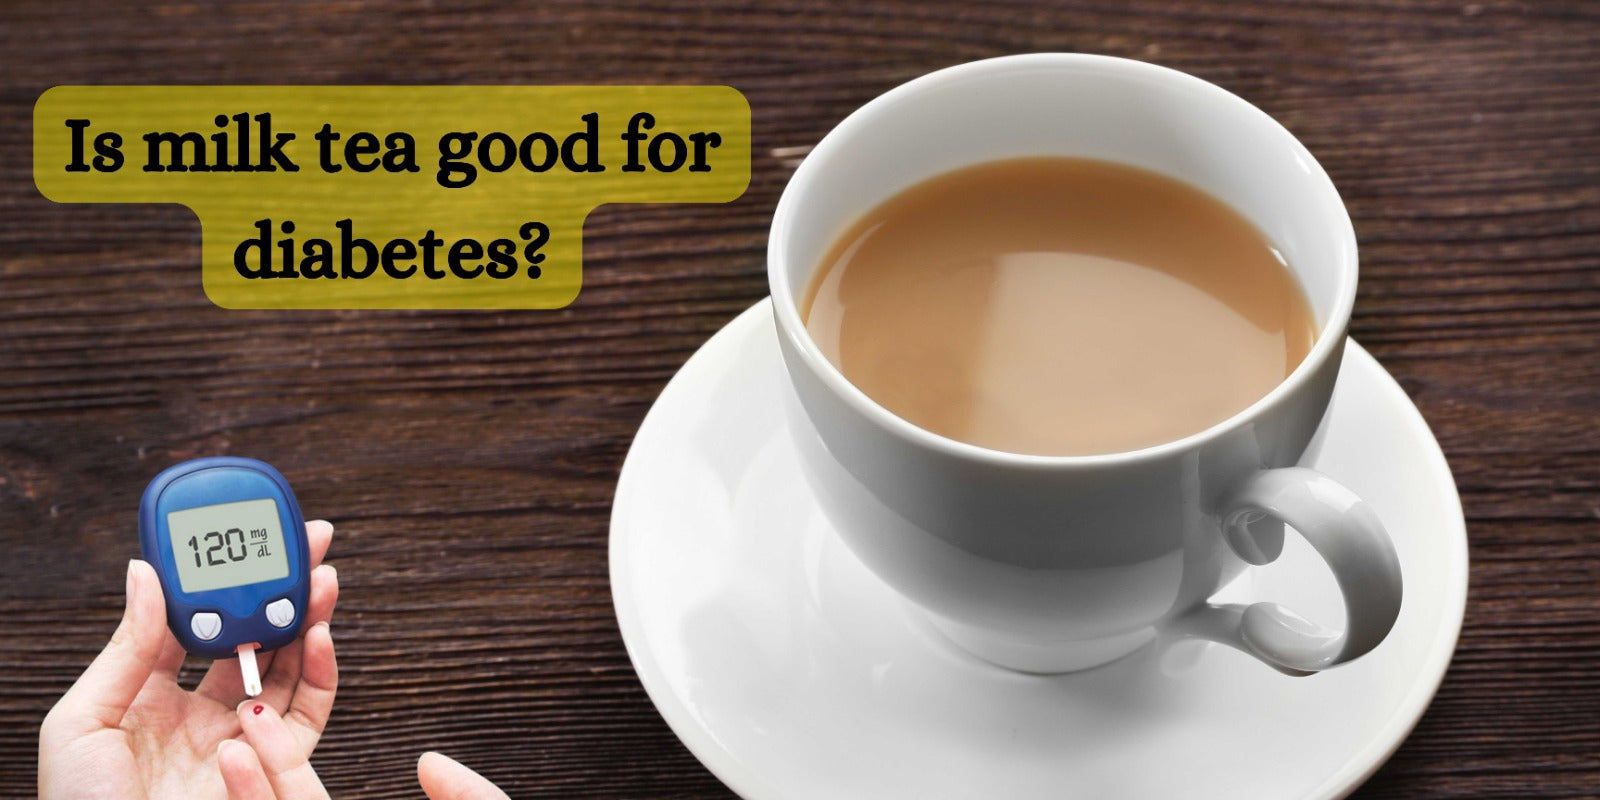 Is milk tea good for diabetes?